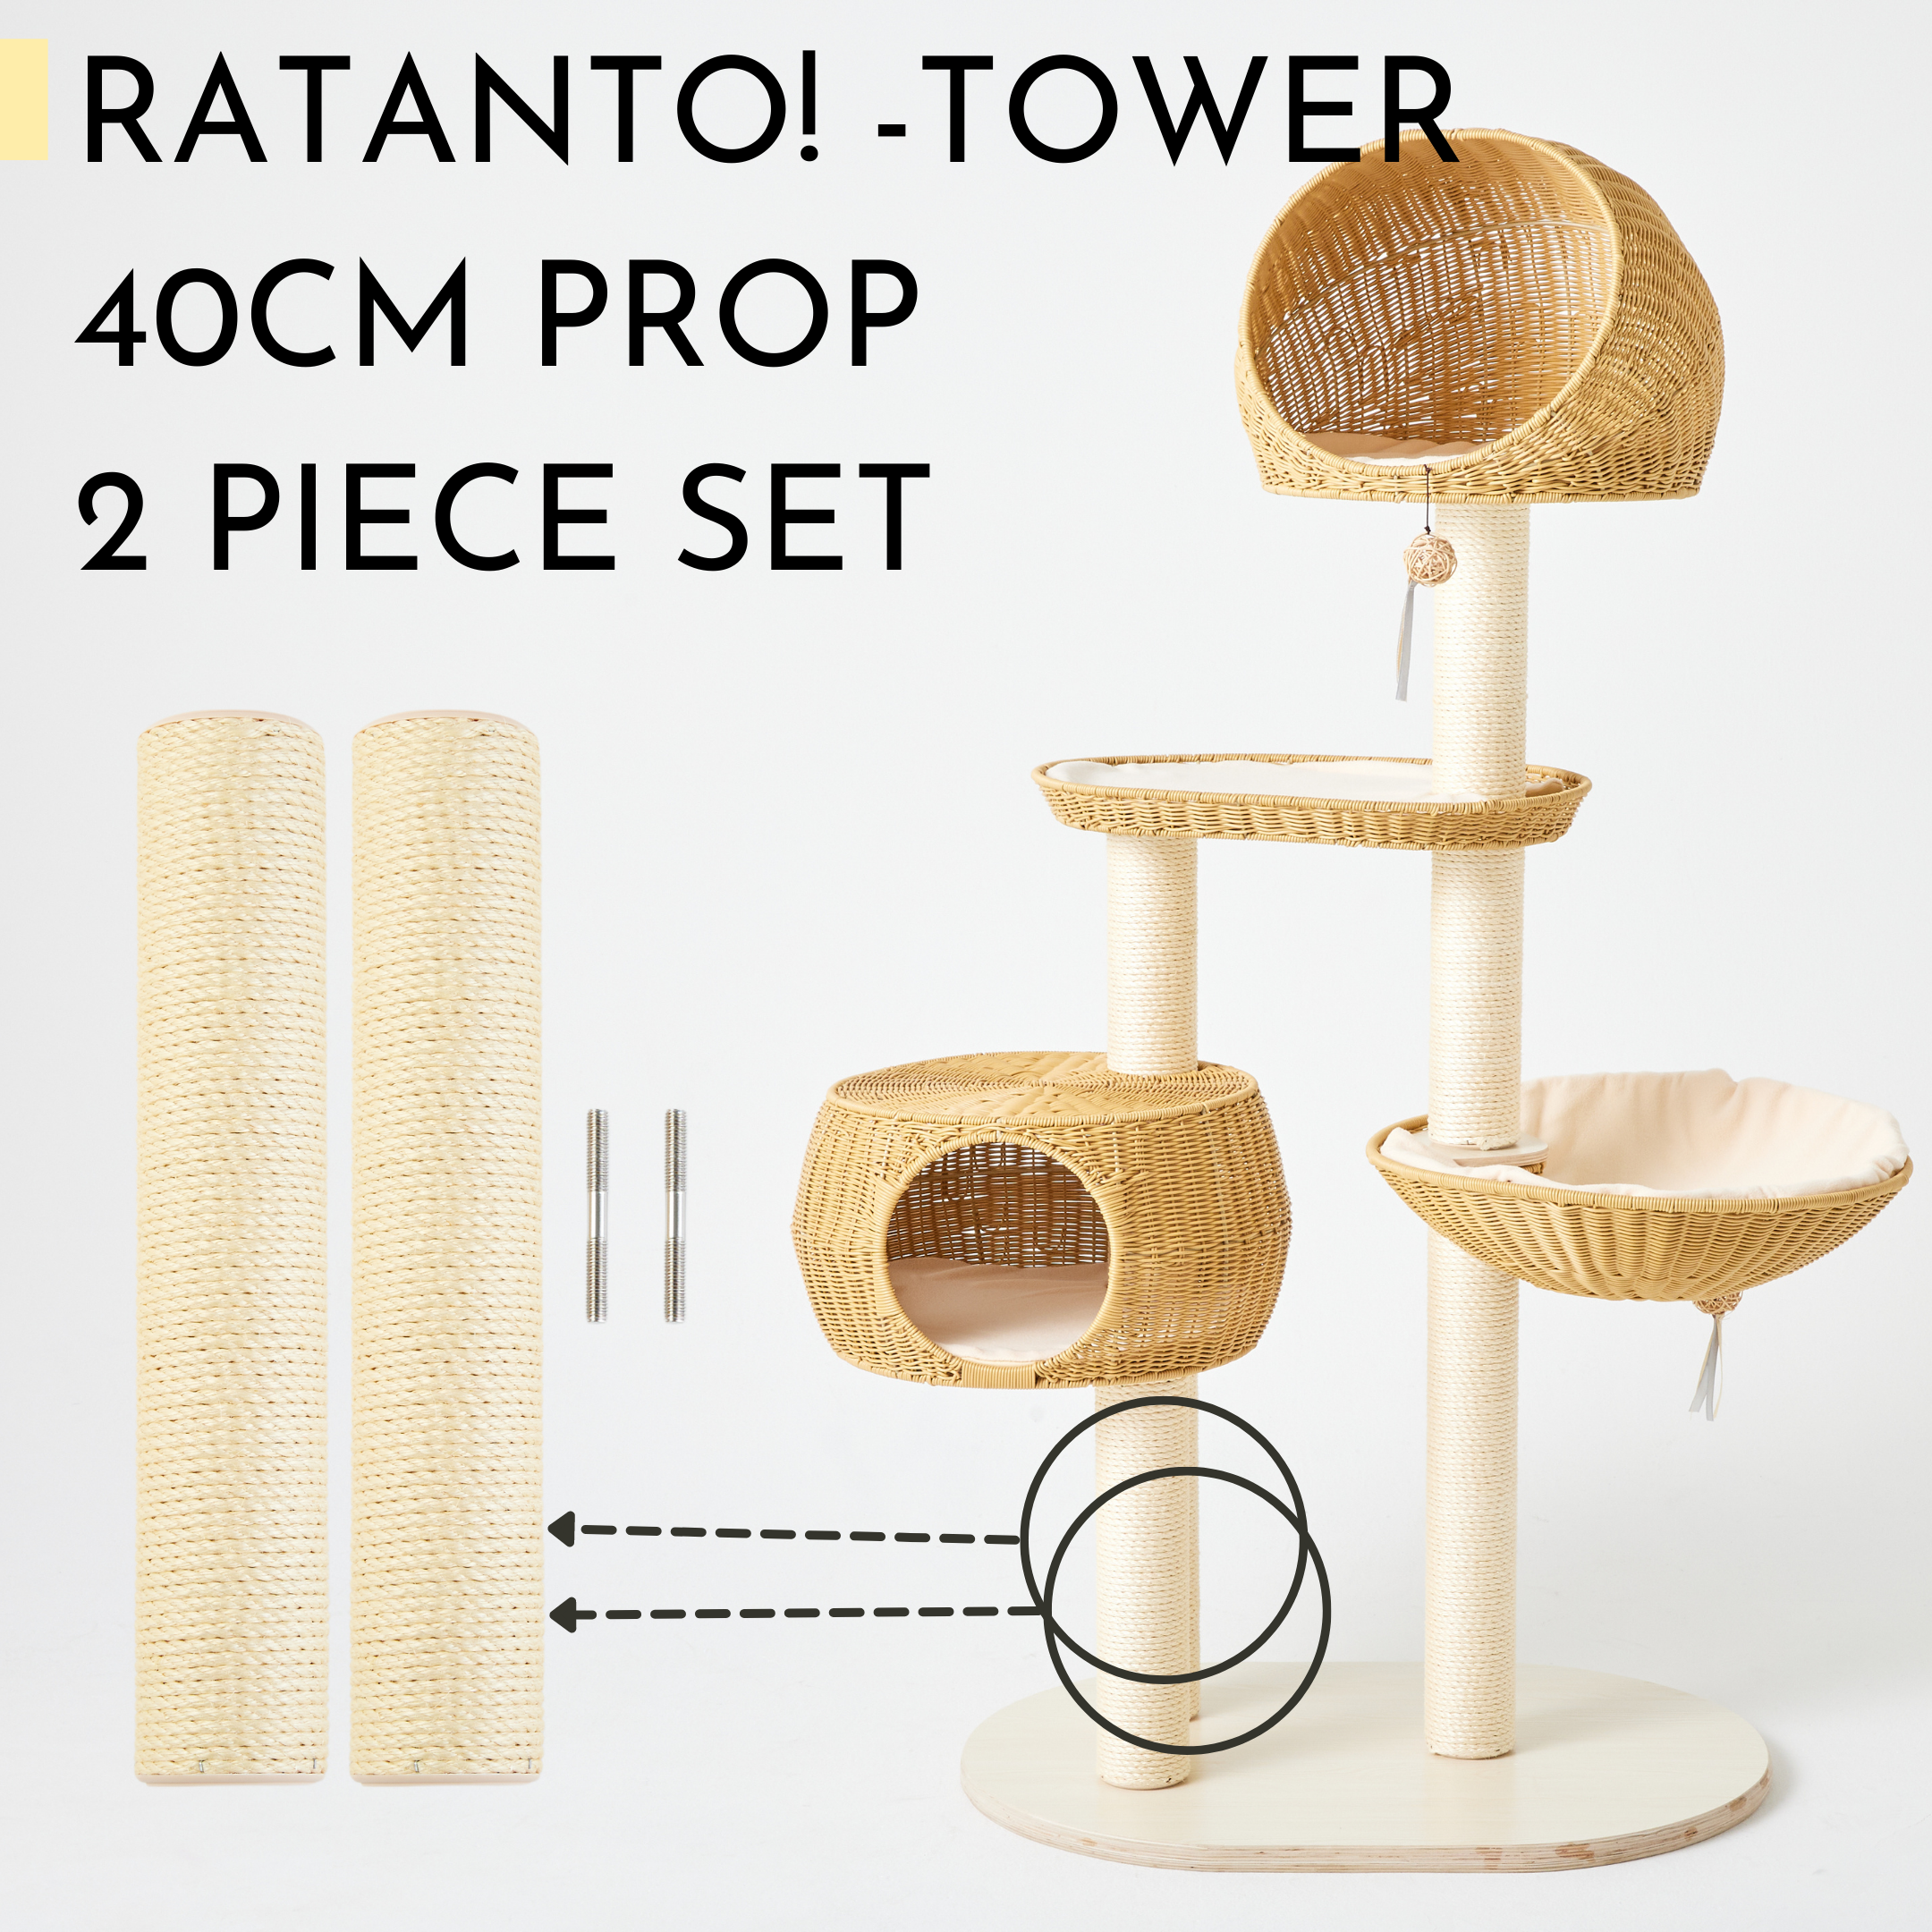 ratanto!シリーズ 置き型キャットタワー専用 交換用支柱 40cm2本